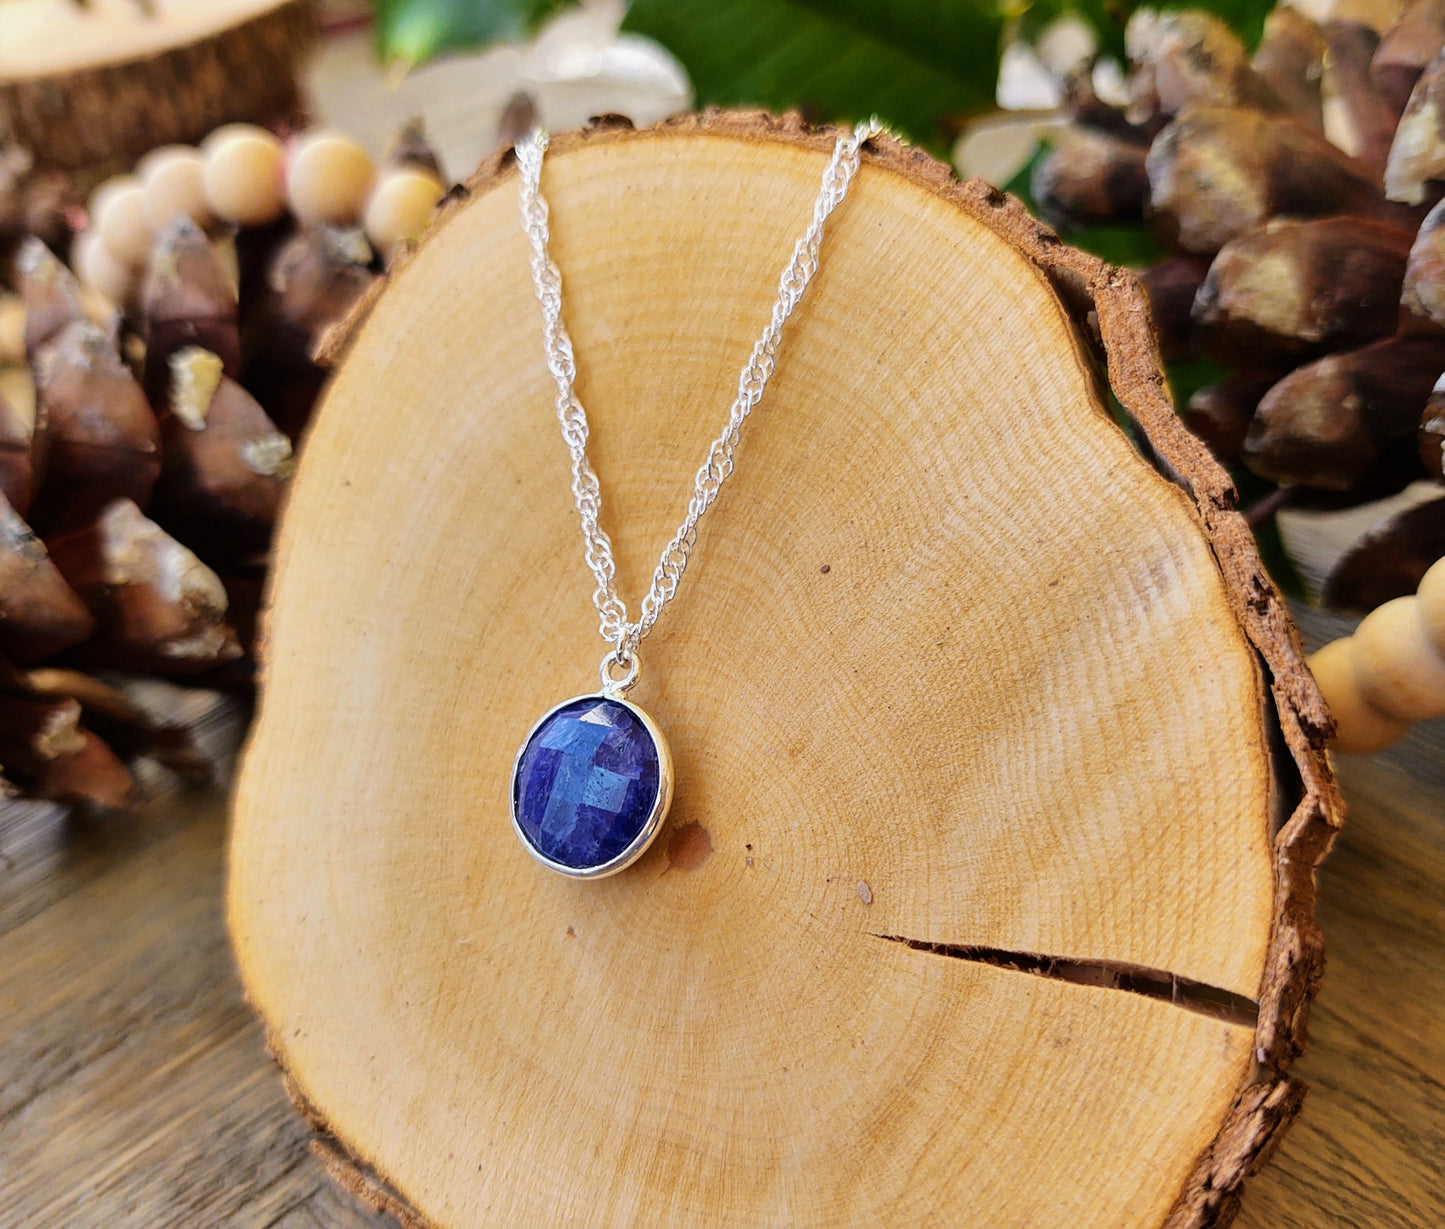 To Sparkle: Sapphire pendant